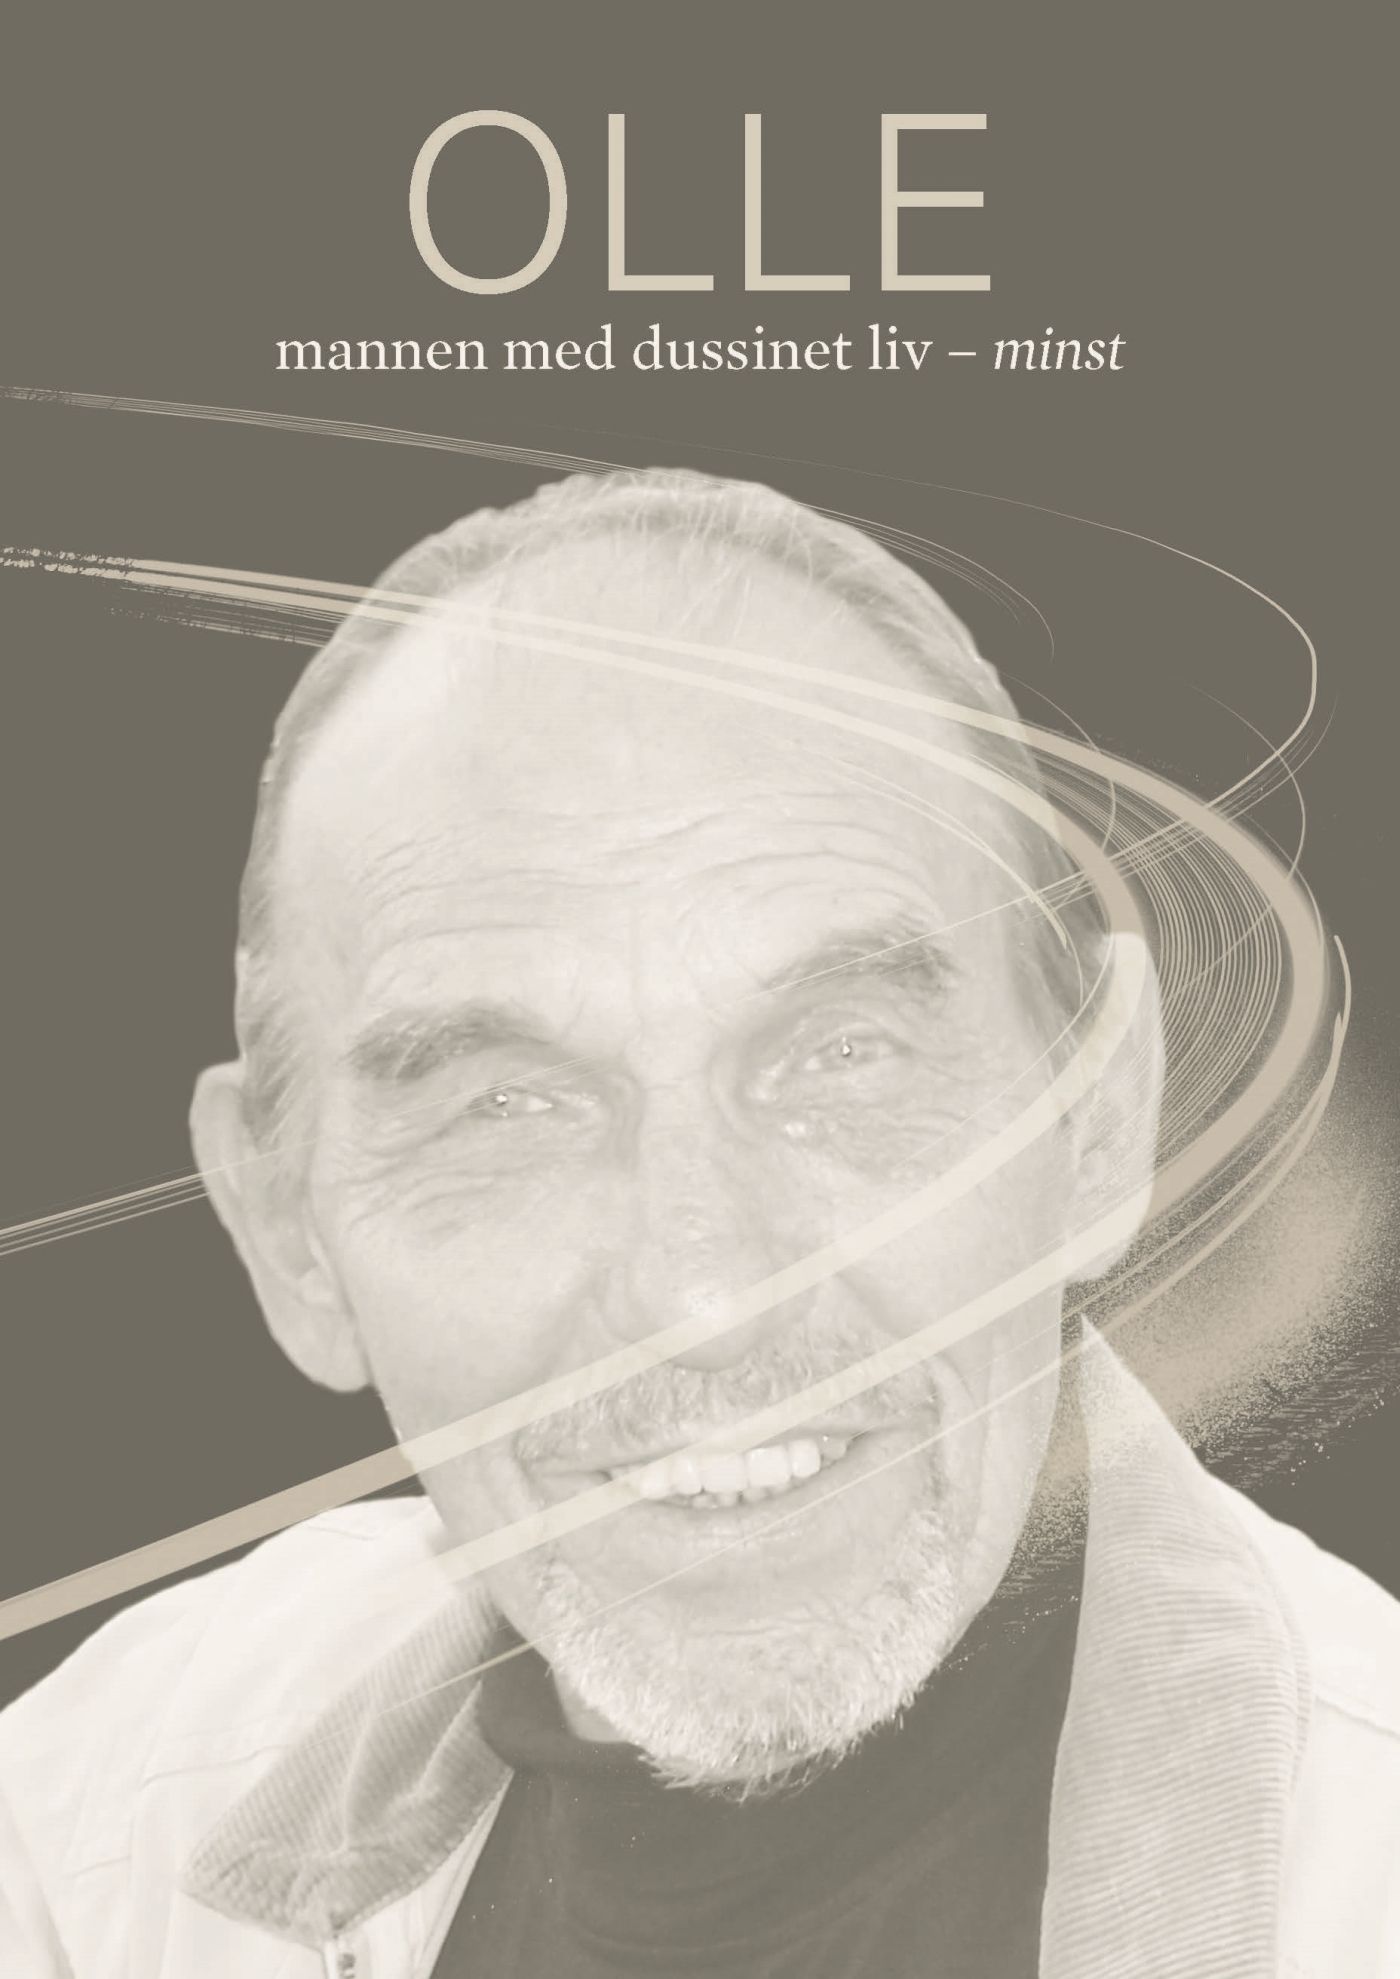 Olle, mannen med dussinet liv - minst., eBook by Barbro Robertsson Strand